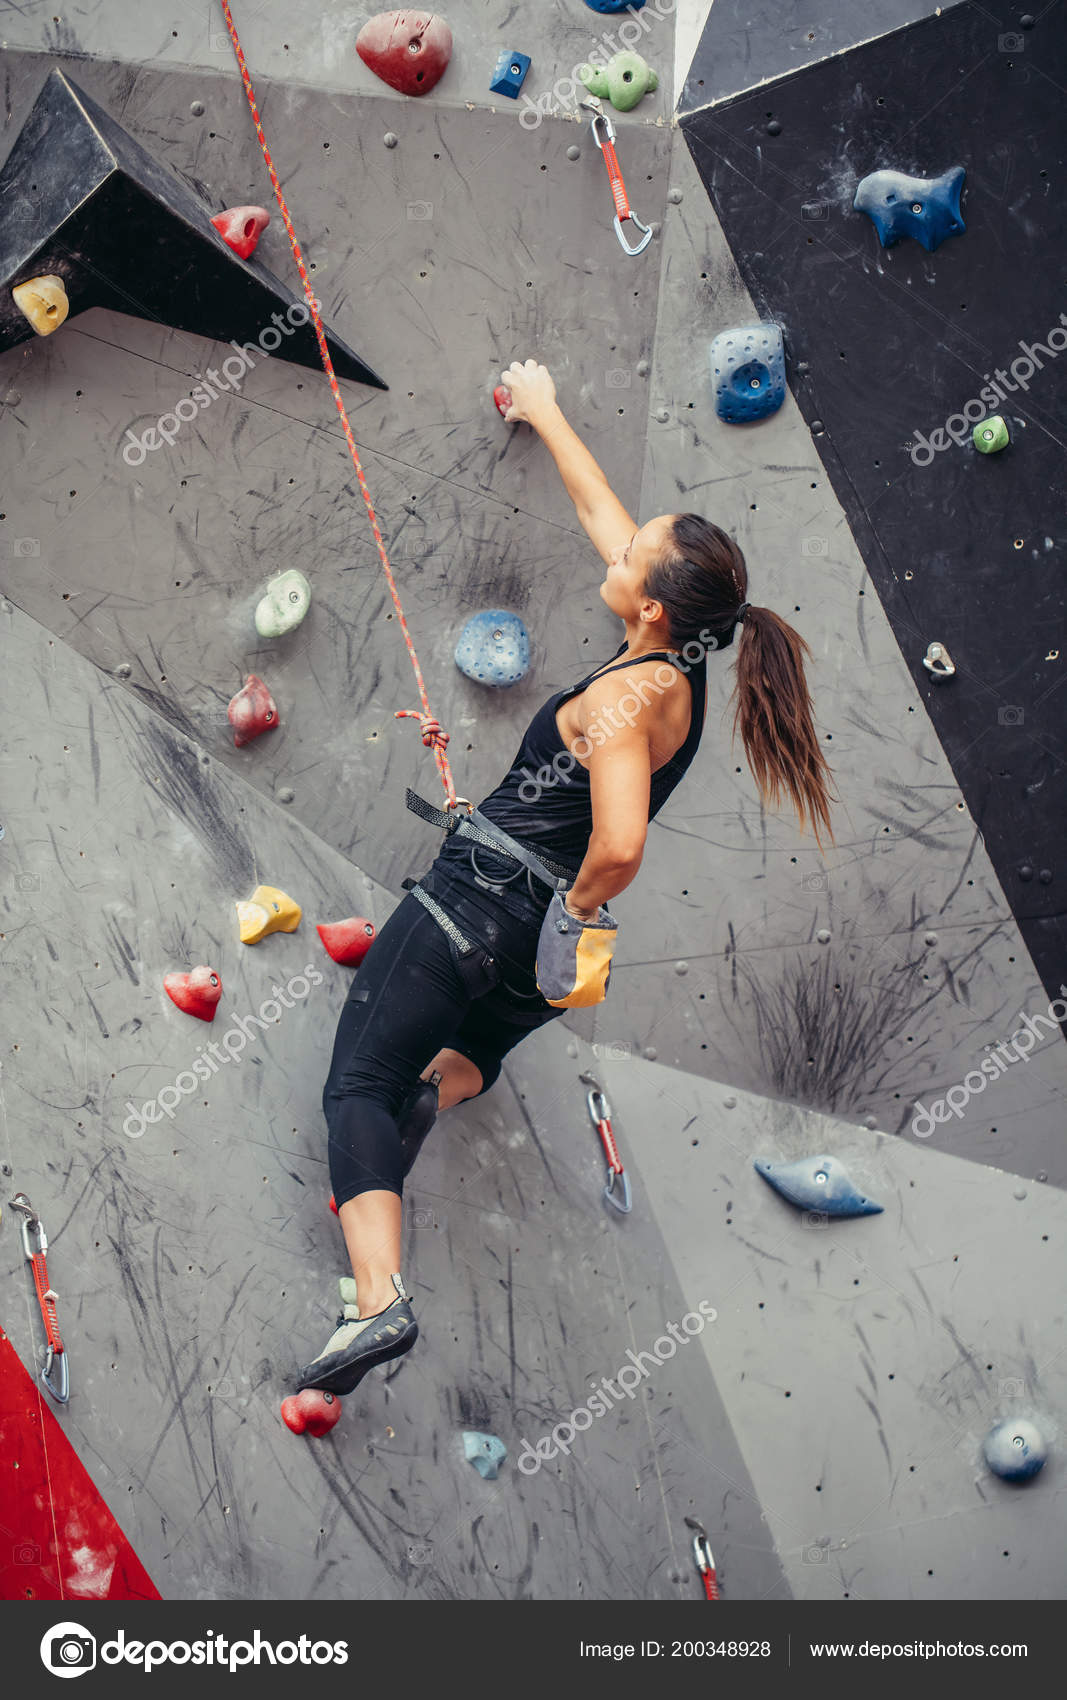 https://st4.depositphotos.com/13768208/20034/i/1600/depositphotos_200348928-stock-photo-sporty-woman-in-boulder-climbing.jpg